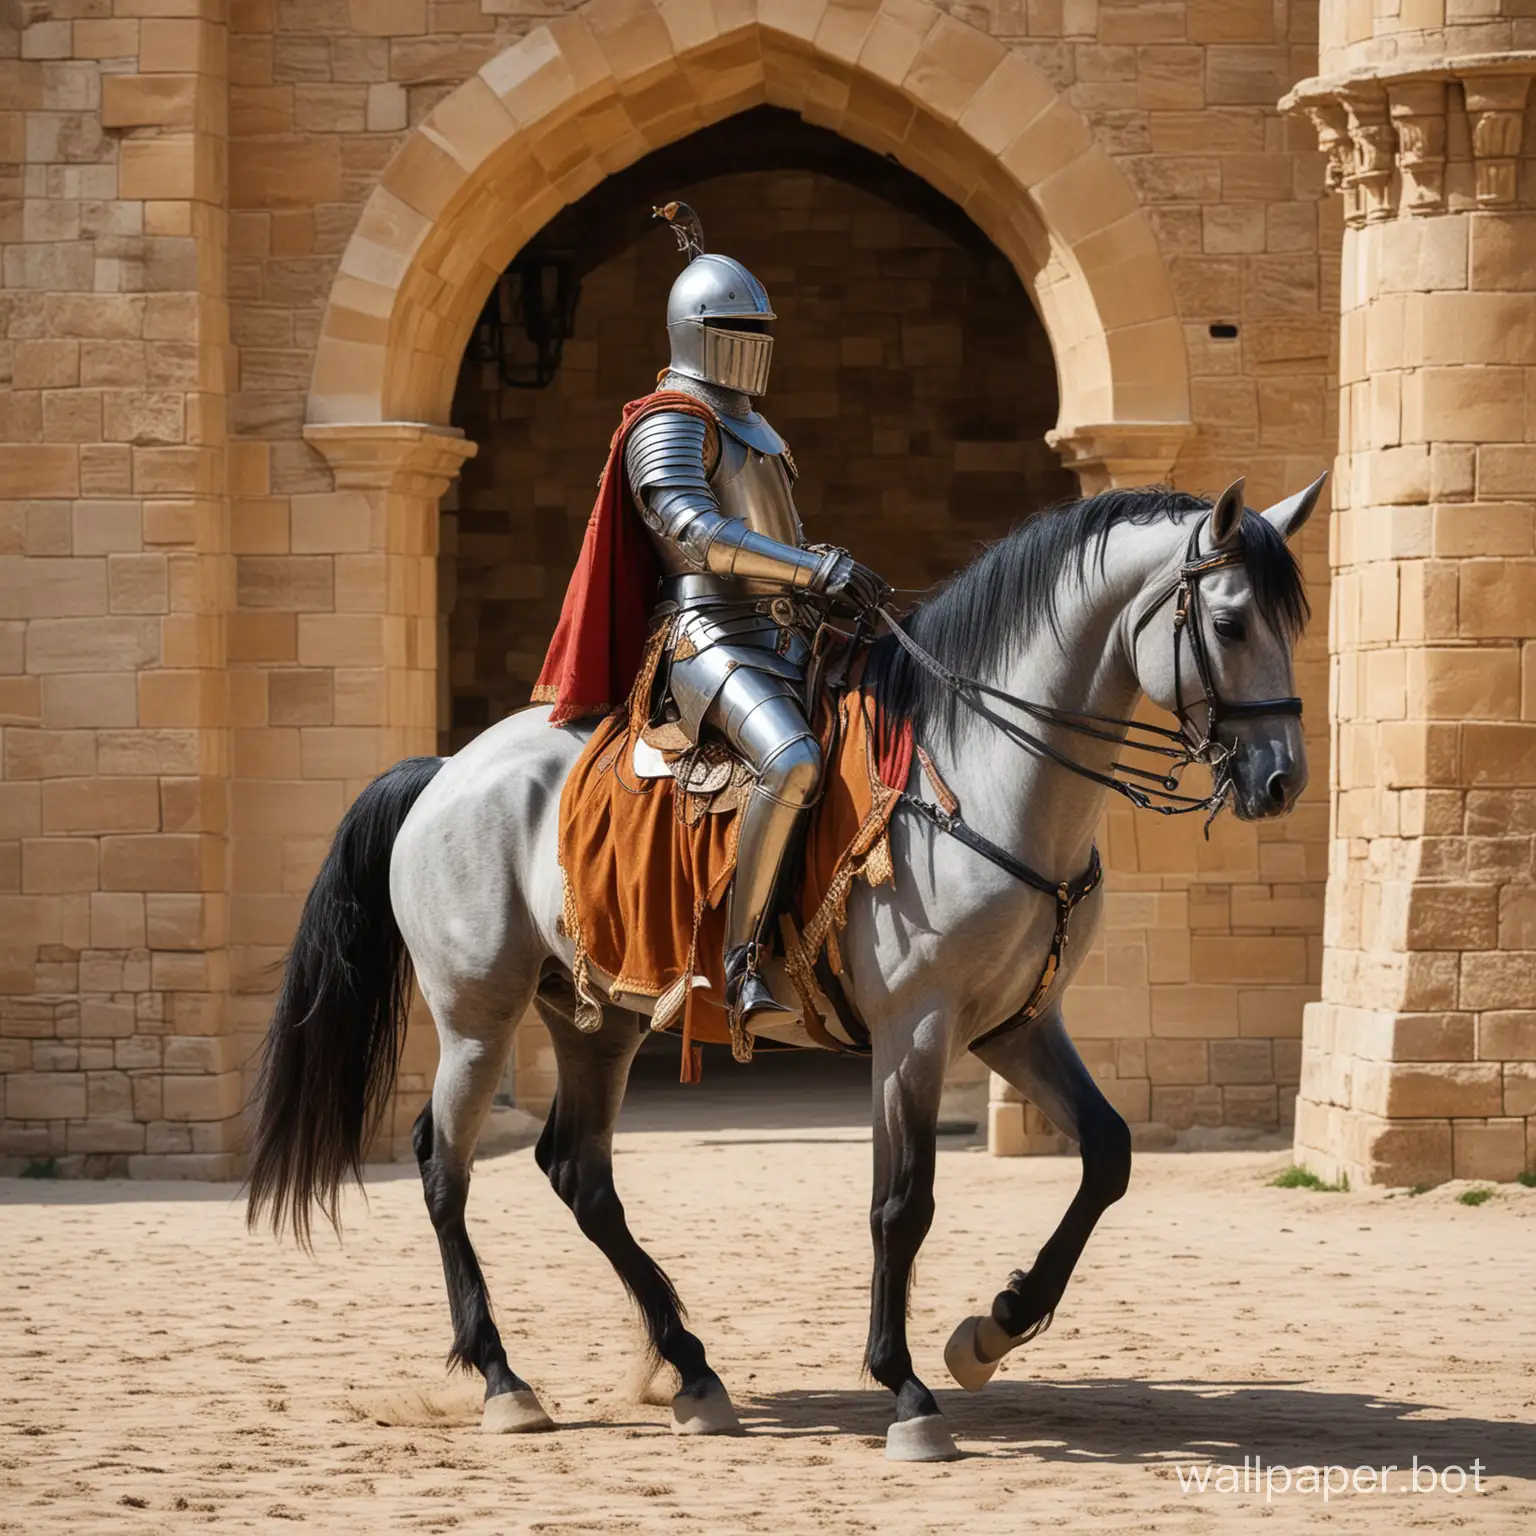 Medieval-Beetle-Knight-Riding-Arabian-Horse-in-Castle